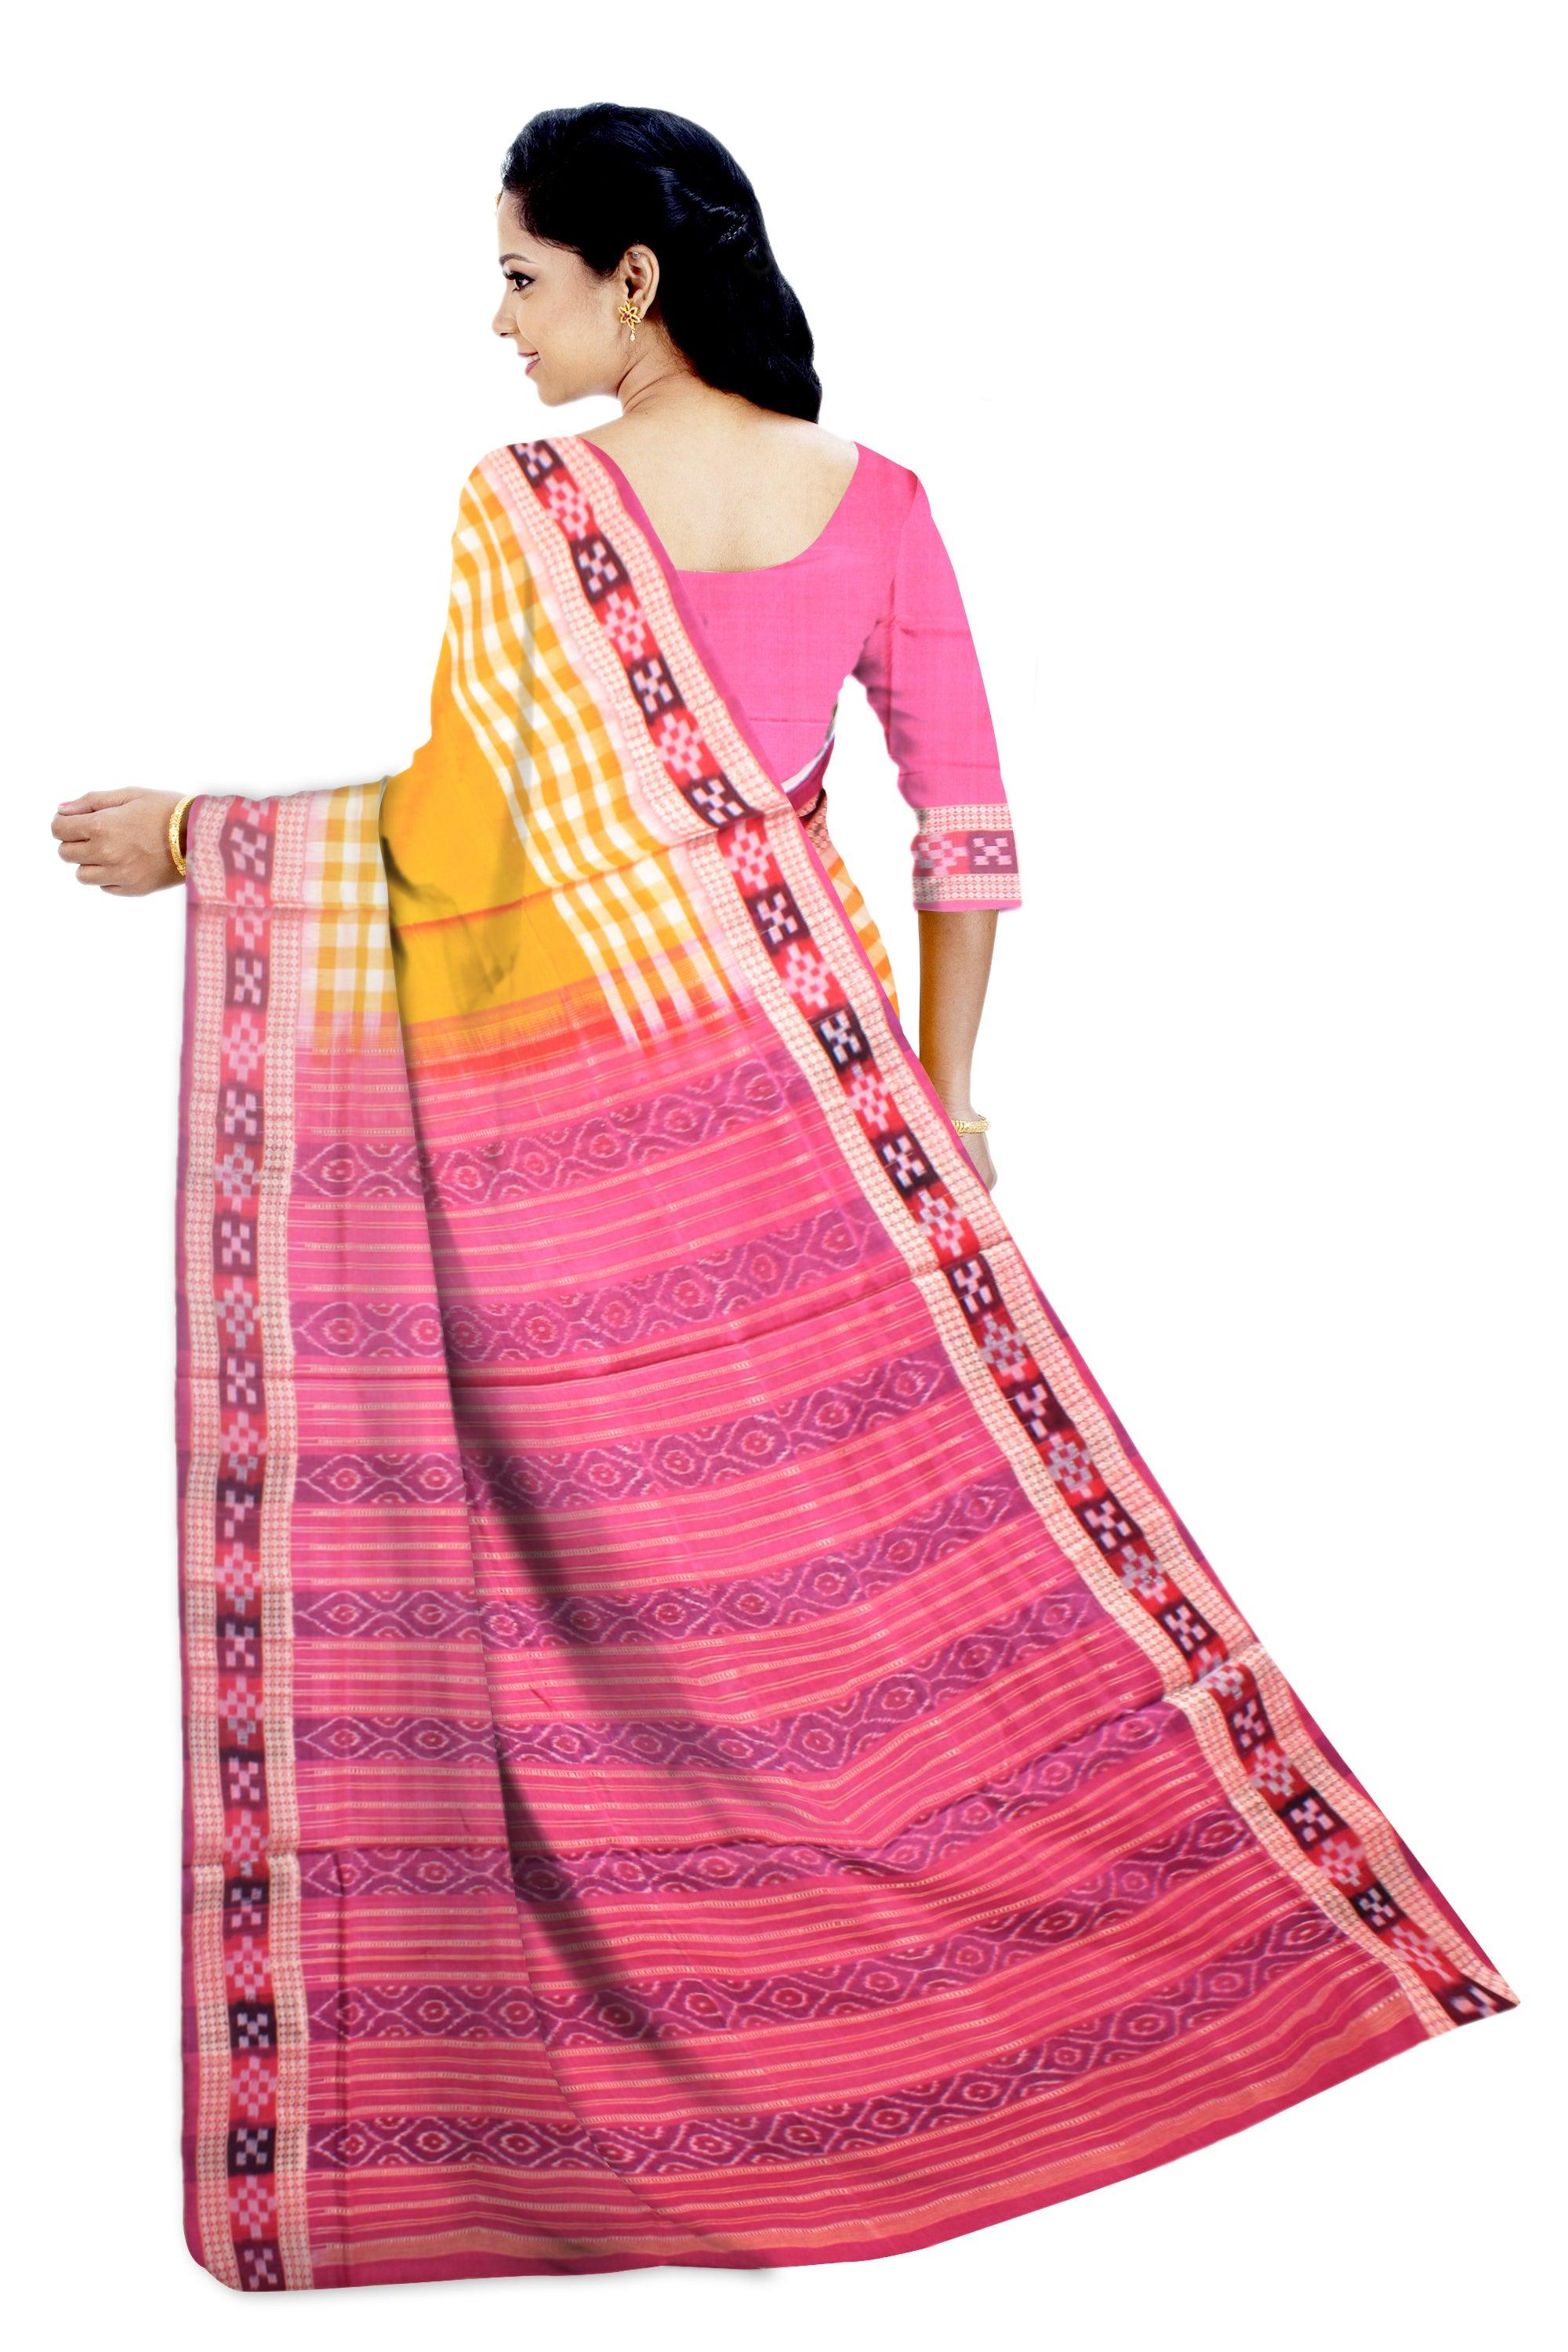 Sambalpuri dhadi sapta cotton saree in yellow and pink color,with available blouse piece. - Koshali Arts & Crafts Enterprise